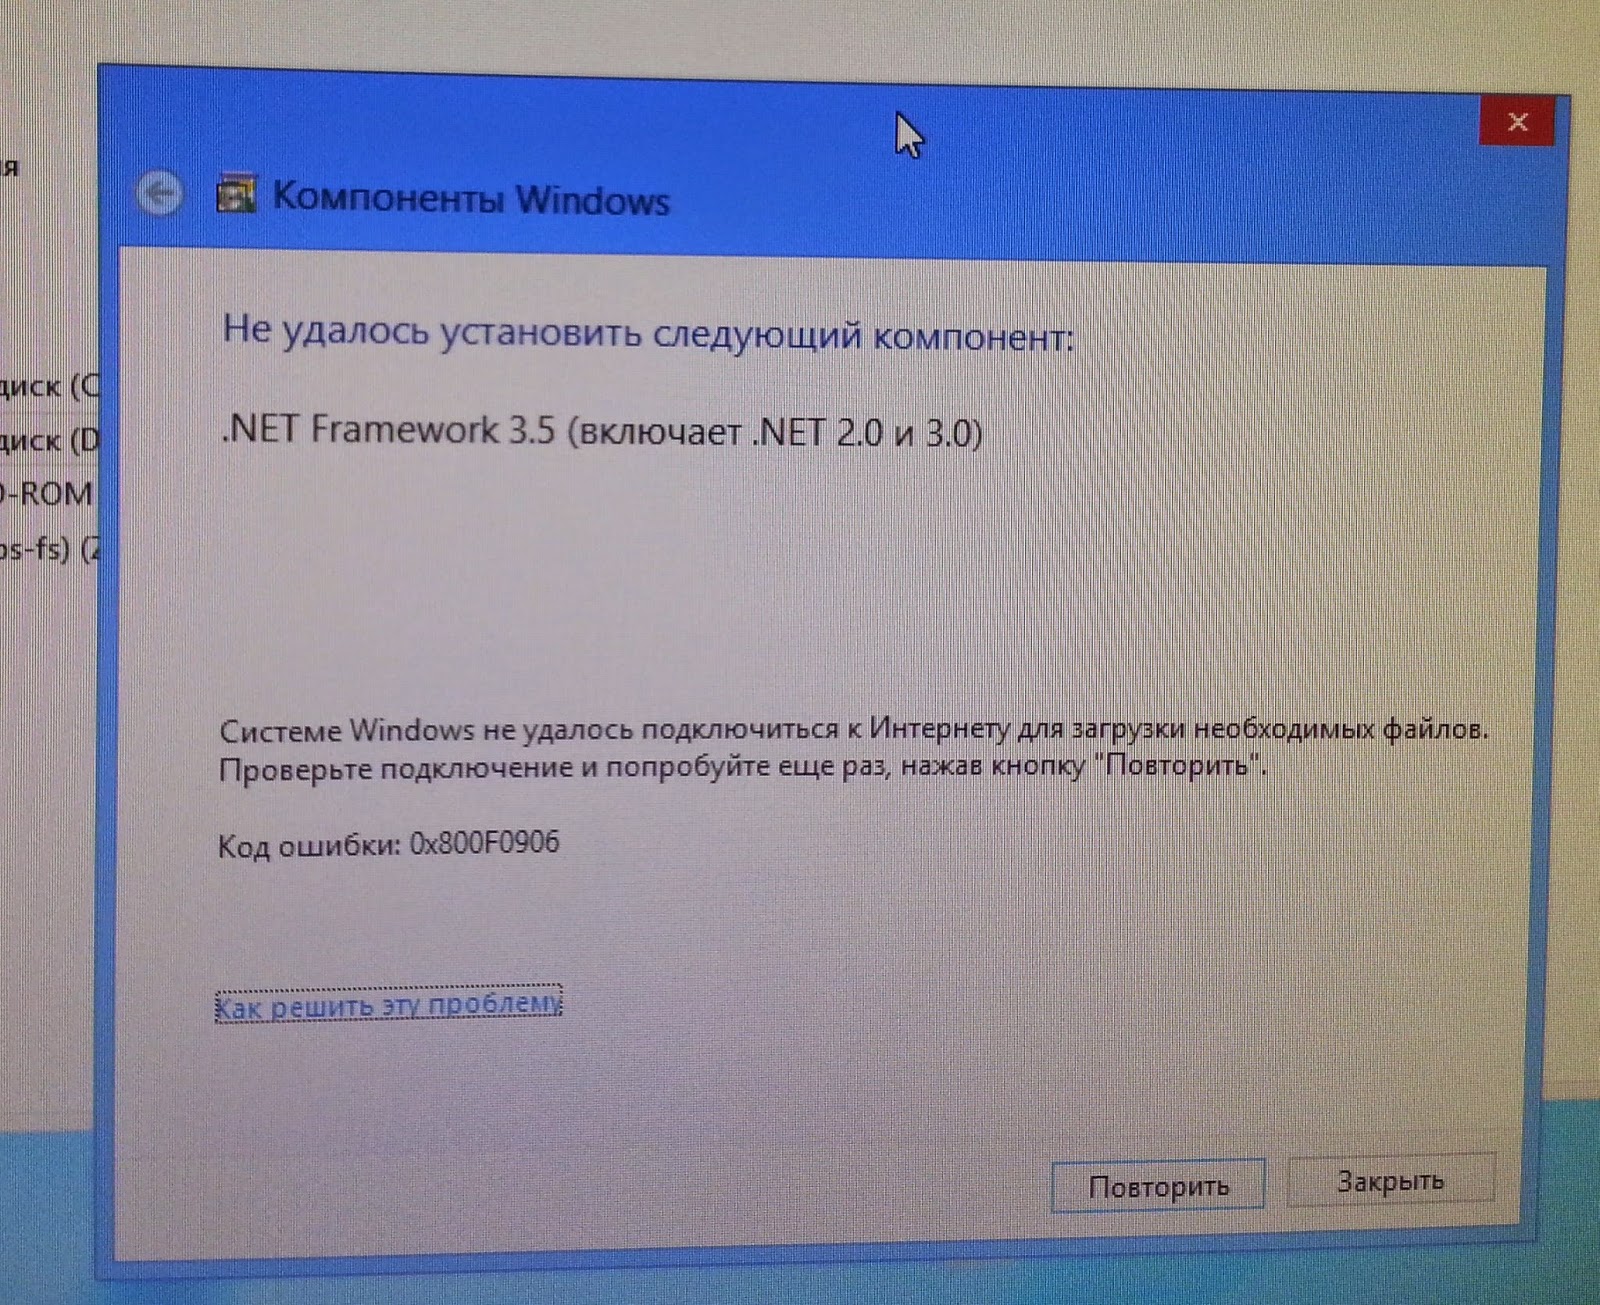 Net framework 3.5 windows 10 без интернета. Ошибка net Framework. Компоненты net Framework 3.5 Windows 10. Net Framework 3.5 ошибка 0x80070422. .Net Framework 3.5 расположение файла.